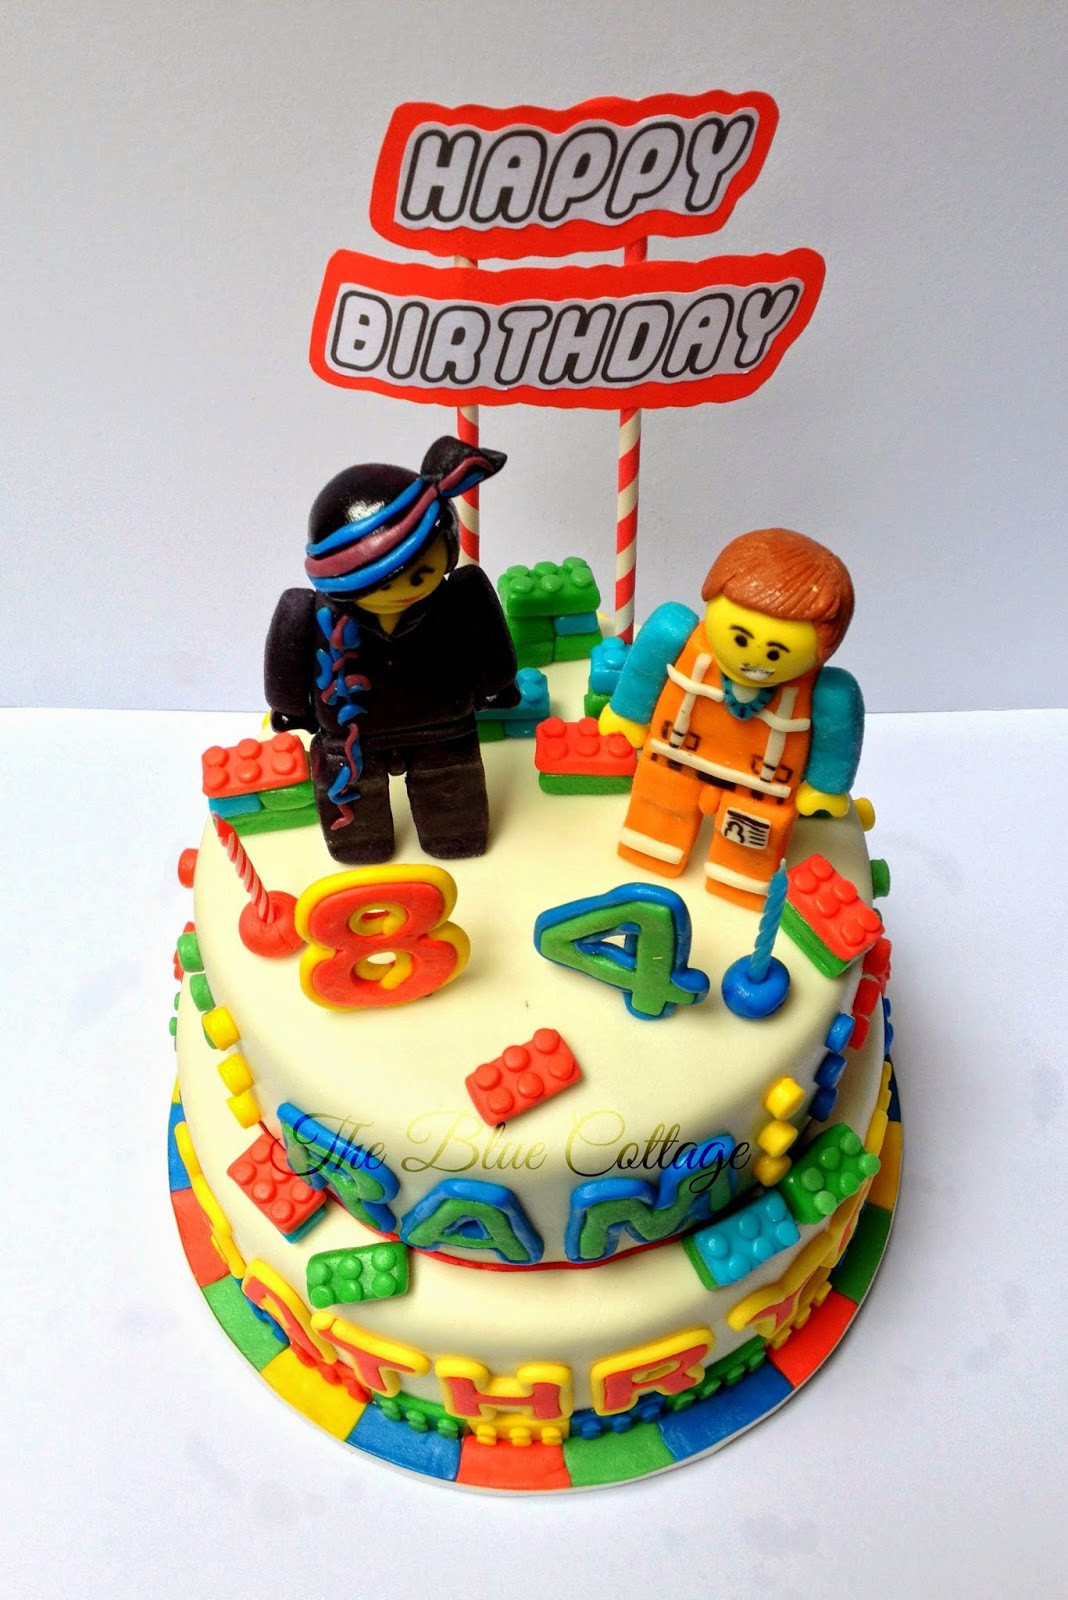 Lego Movie Birthday Cake
 The Blue Cottage Fondant Birthday Cake Lego Movie Emmet